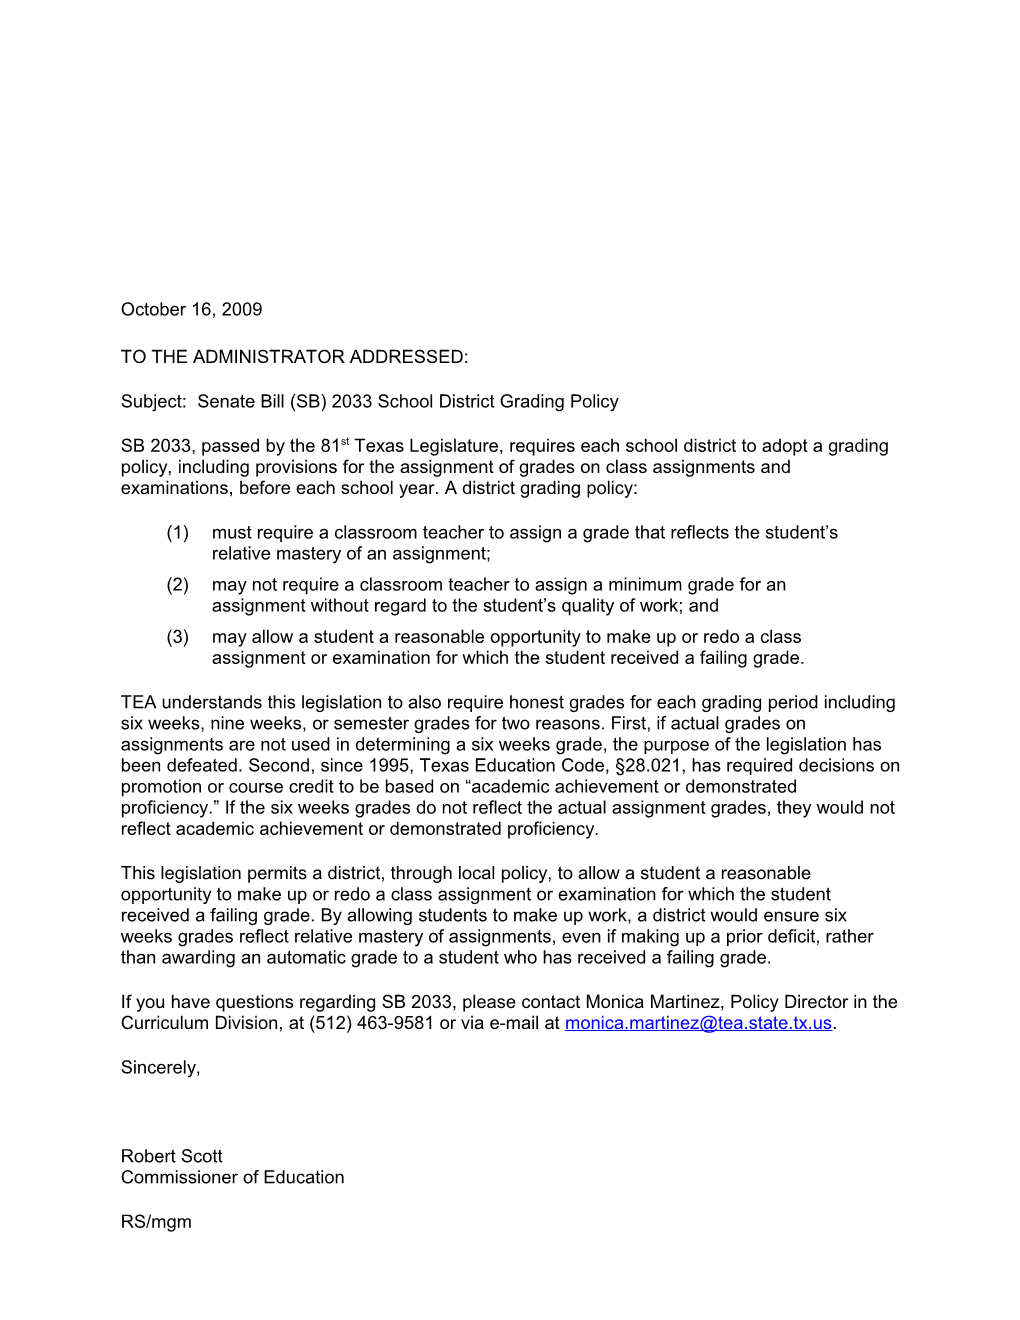 Subject: Senate Bill (SB) 2033 School District Grading Policy